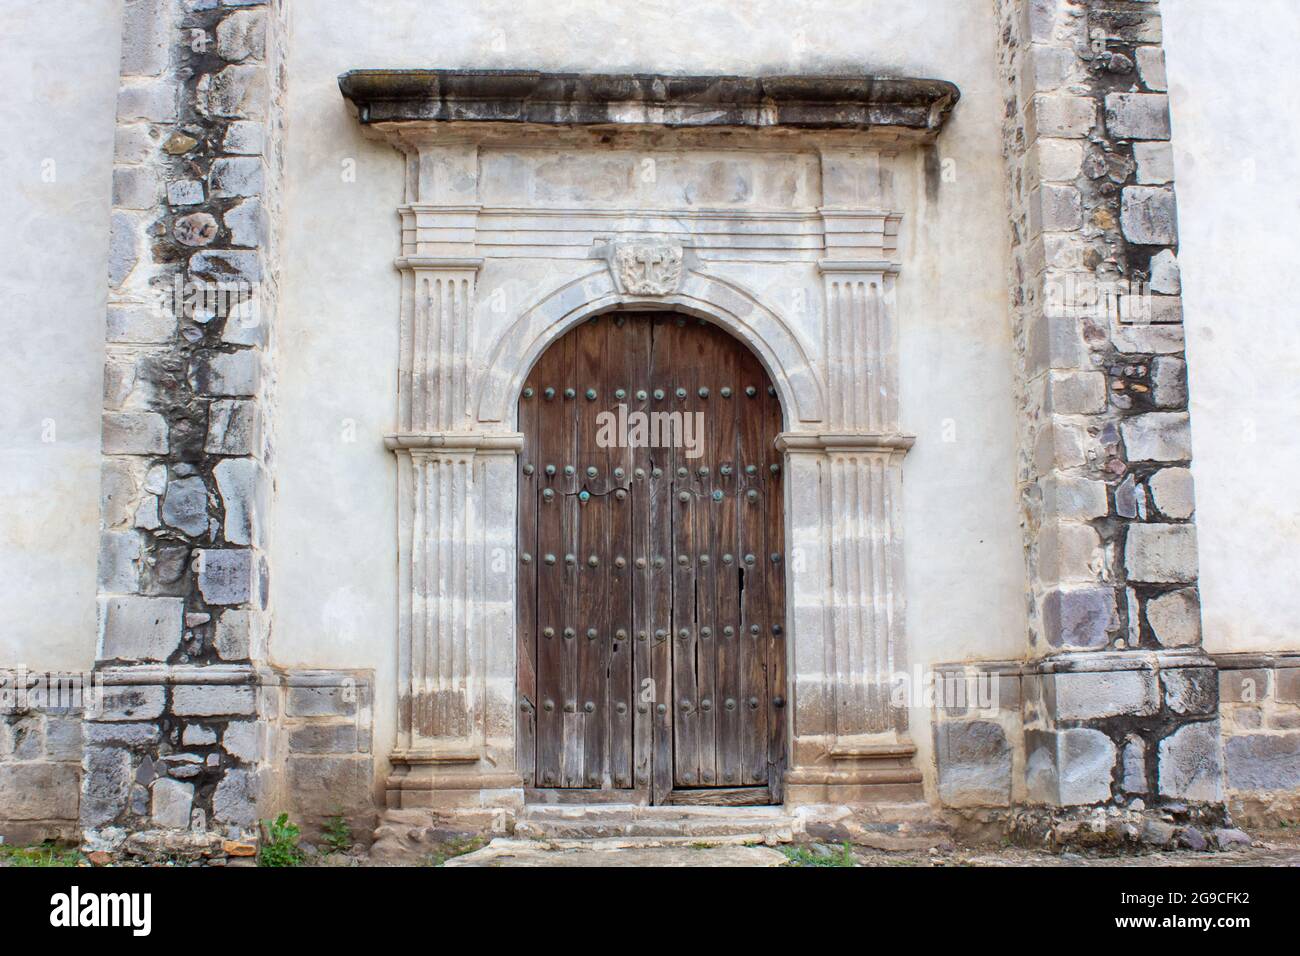 The details of the Santa Catarina temple in Ahuachapan, Jalisco, Mexico Stock Photo